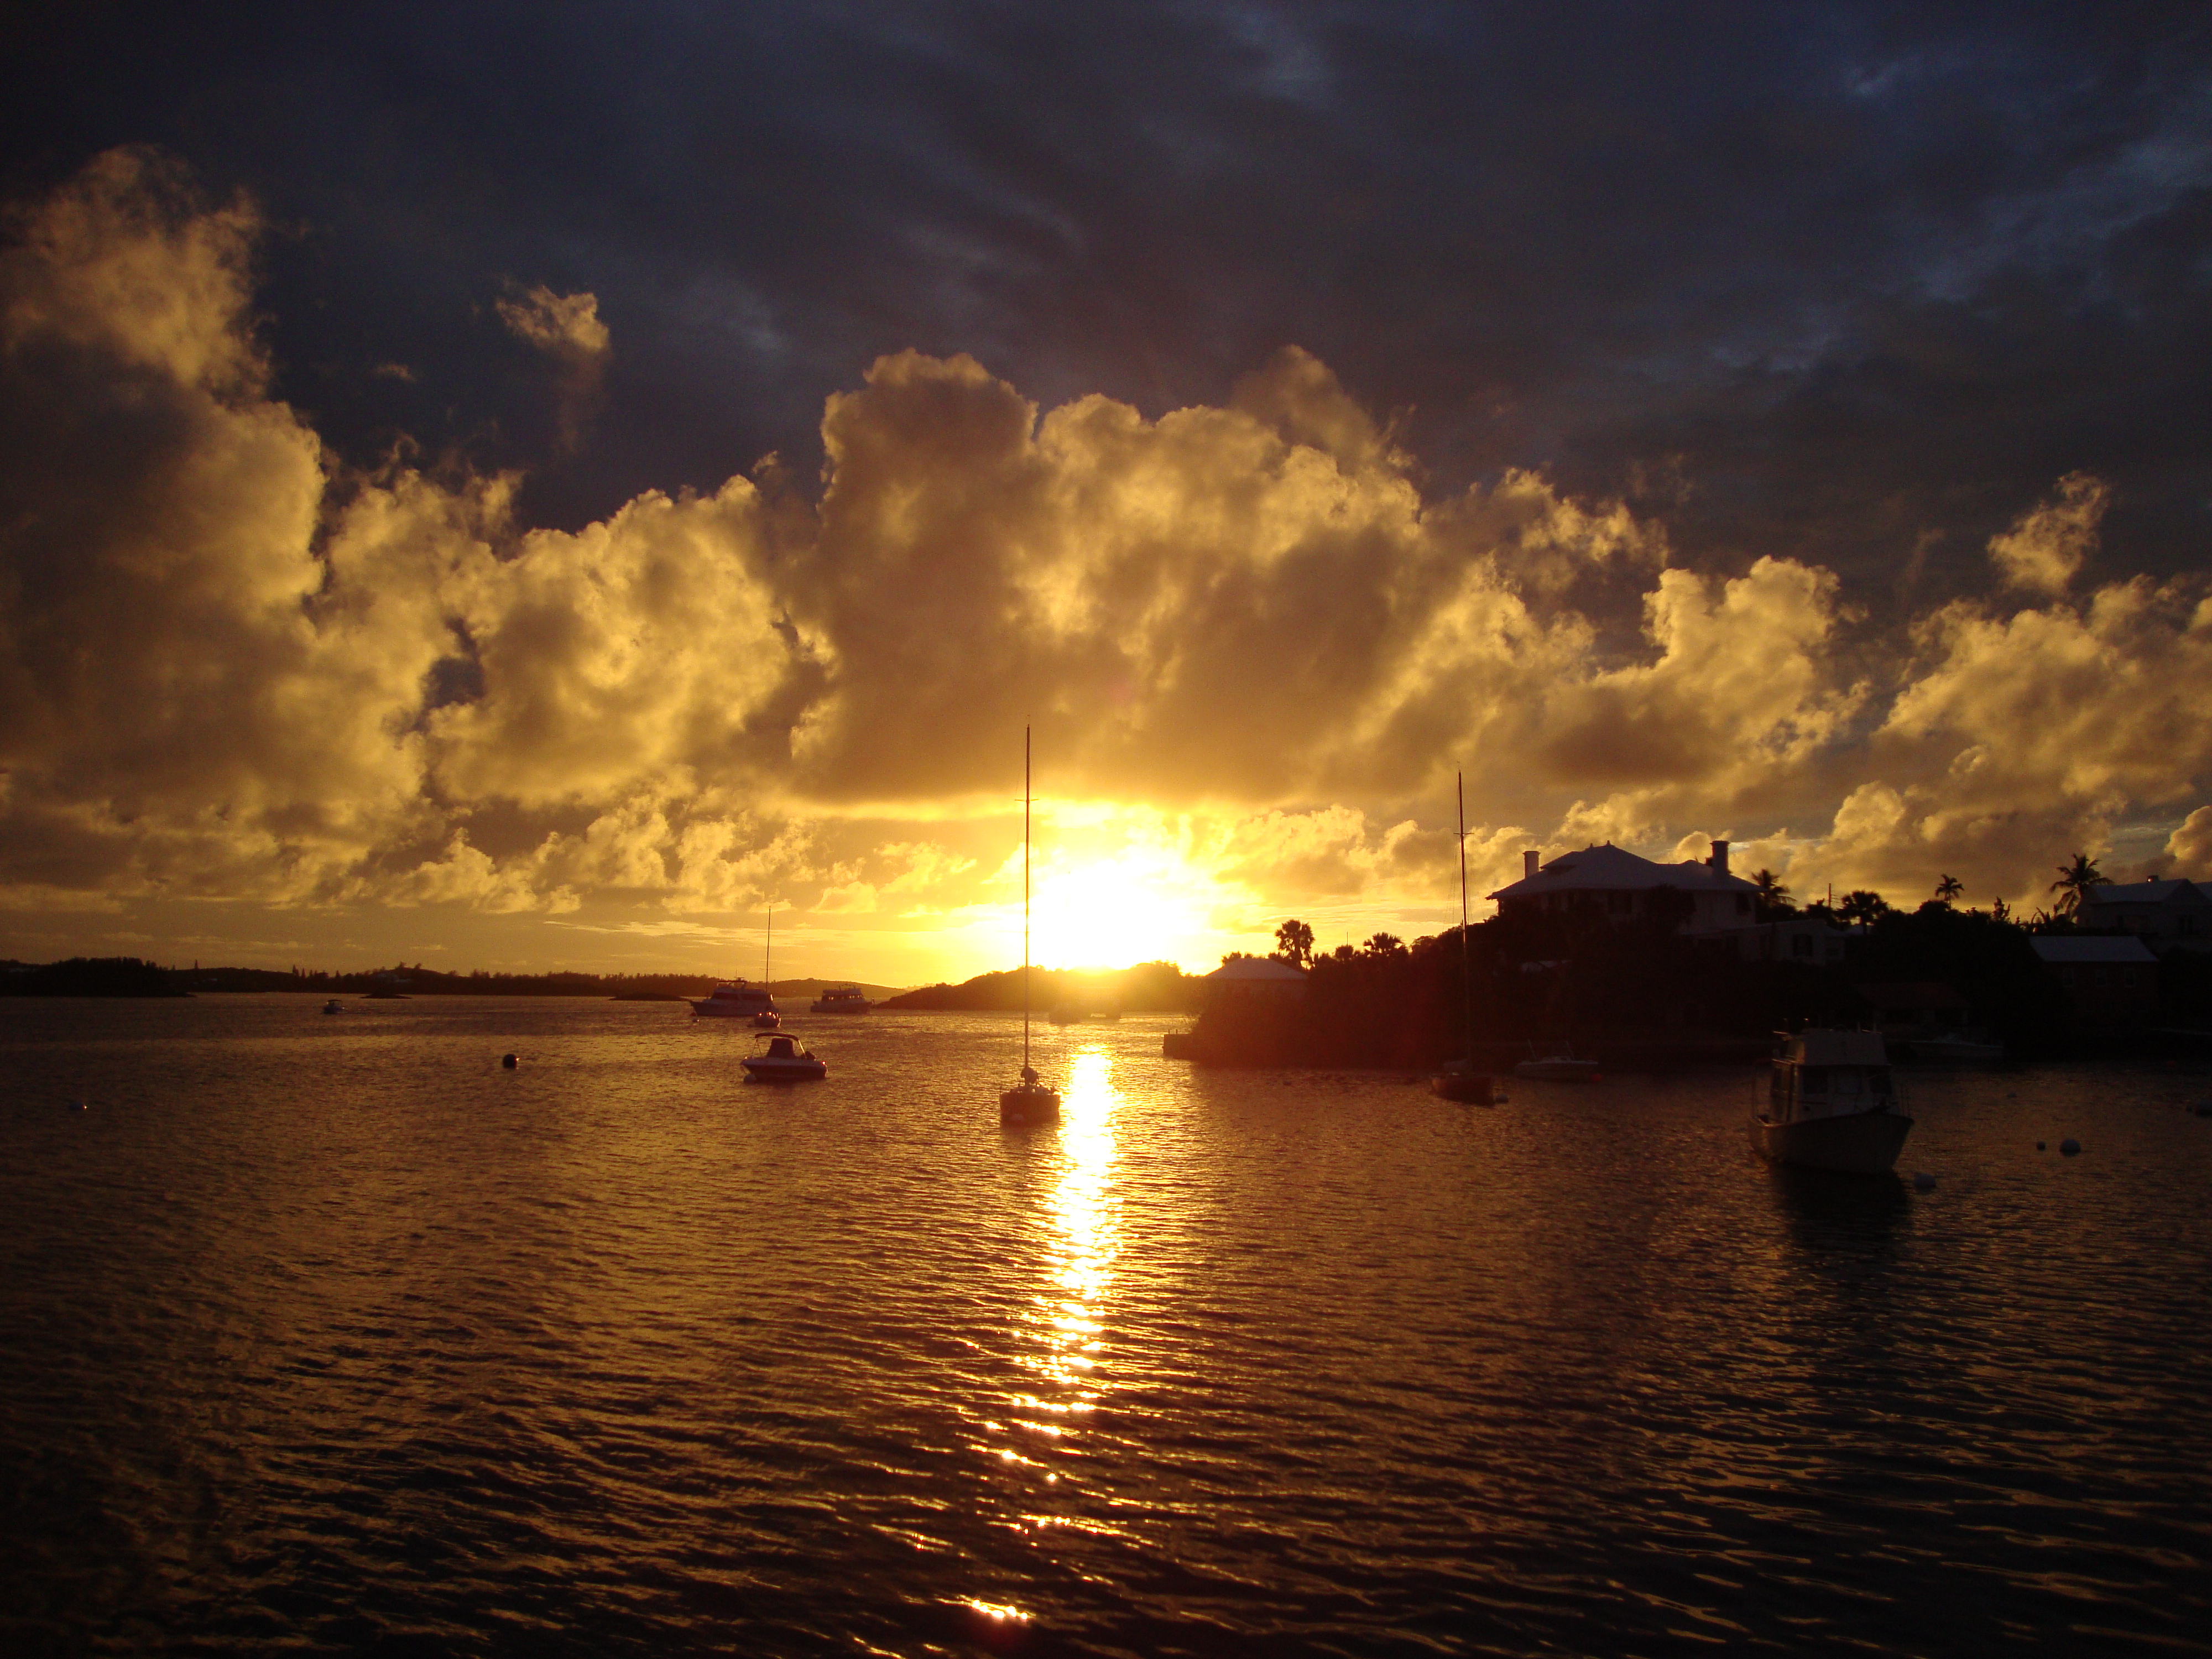 Photo Credit: Sangita Iyer - The Mesmerizing Bermuda Sunrise revitalizes me to manifest my life's purpose